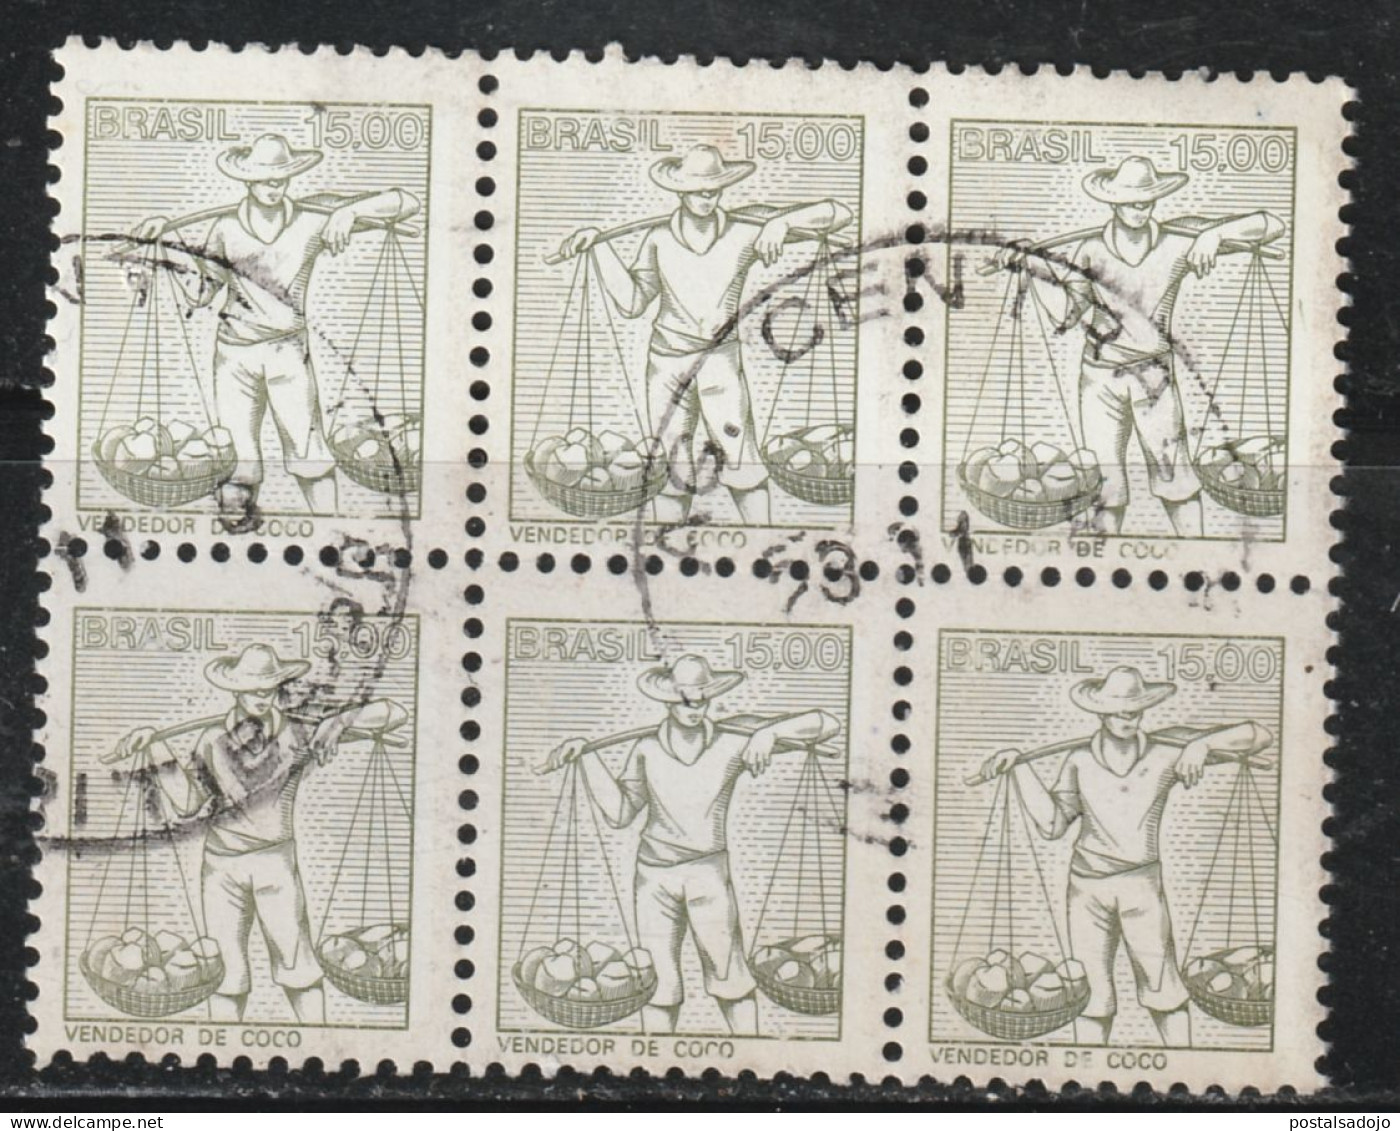 BRÉSIL 634 // YVERT 1300X6  //  1978 - Used Stamps